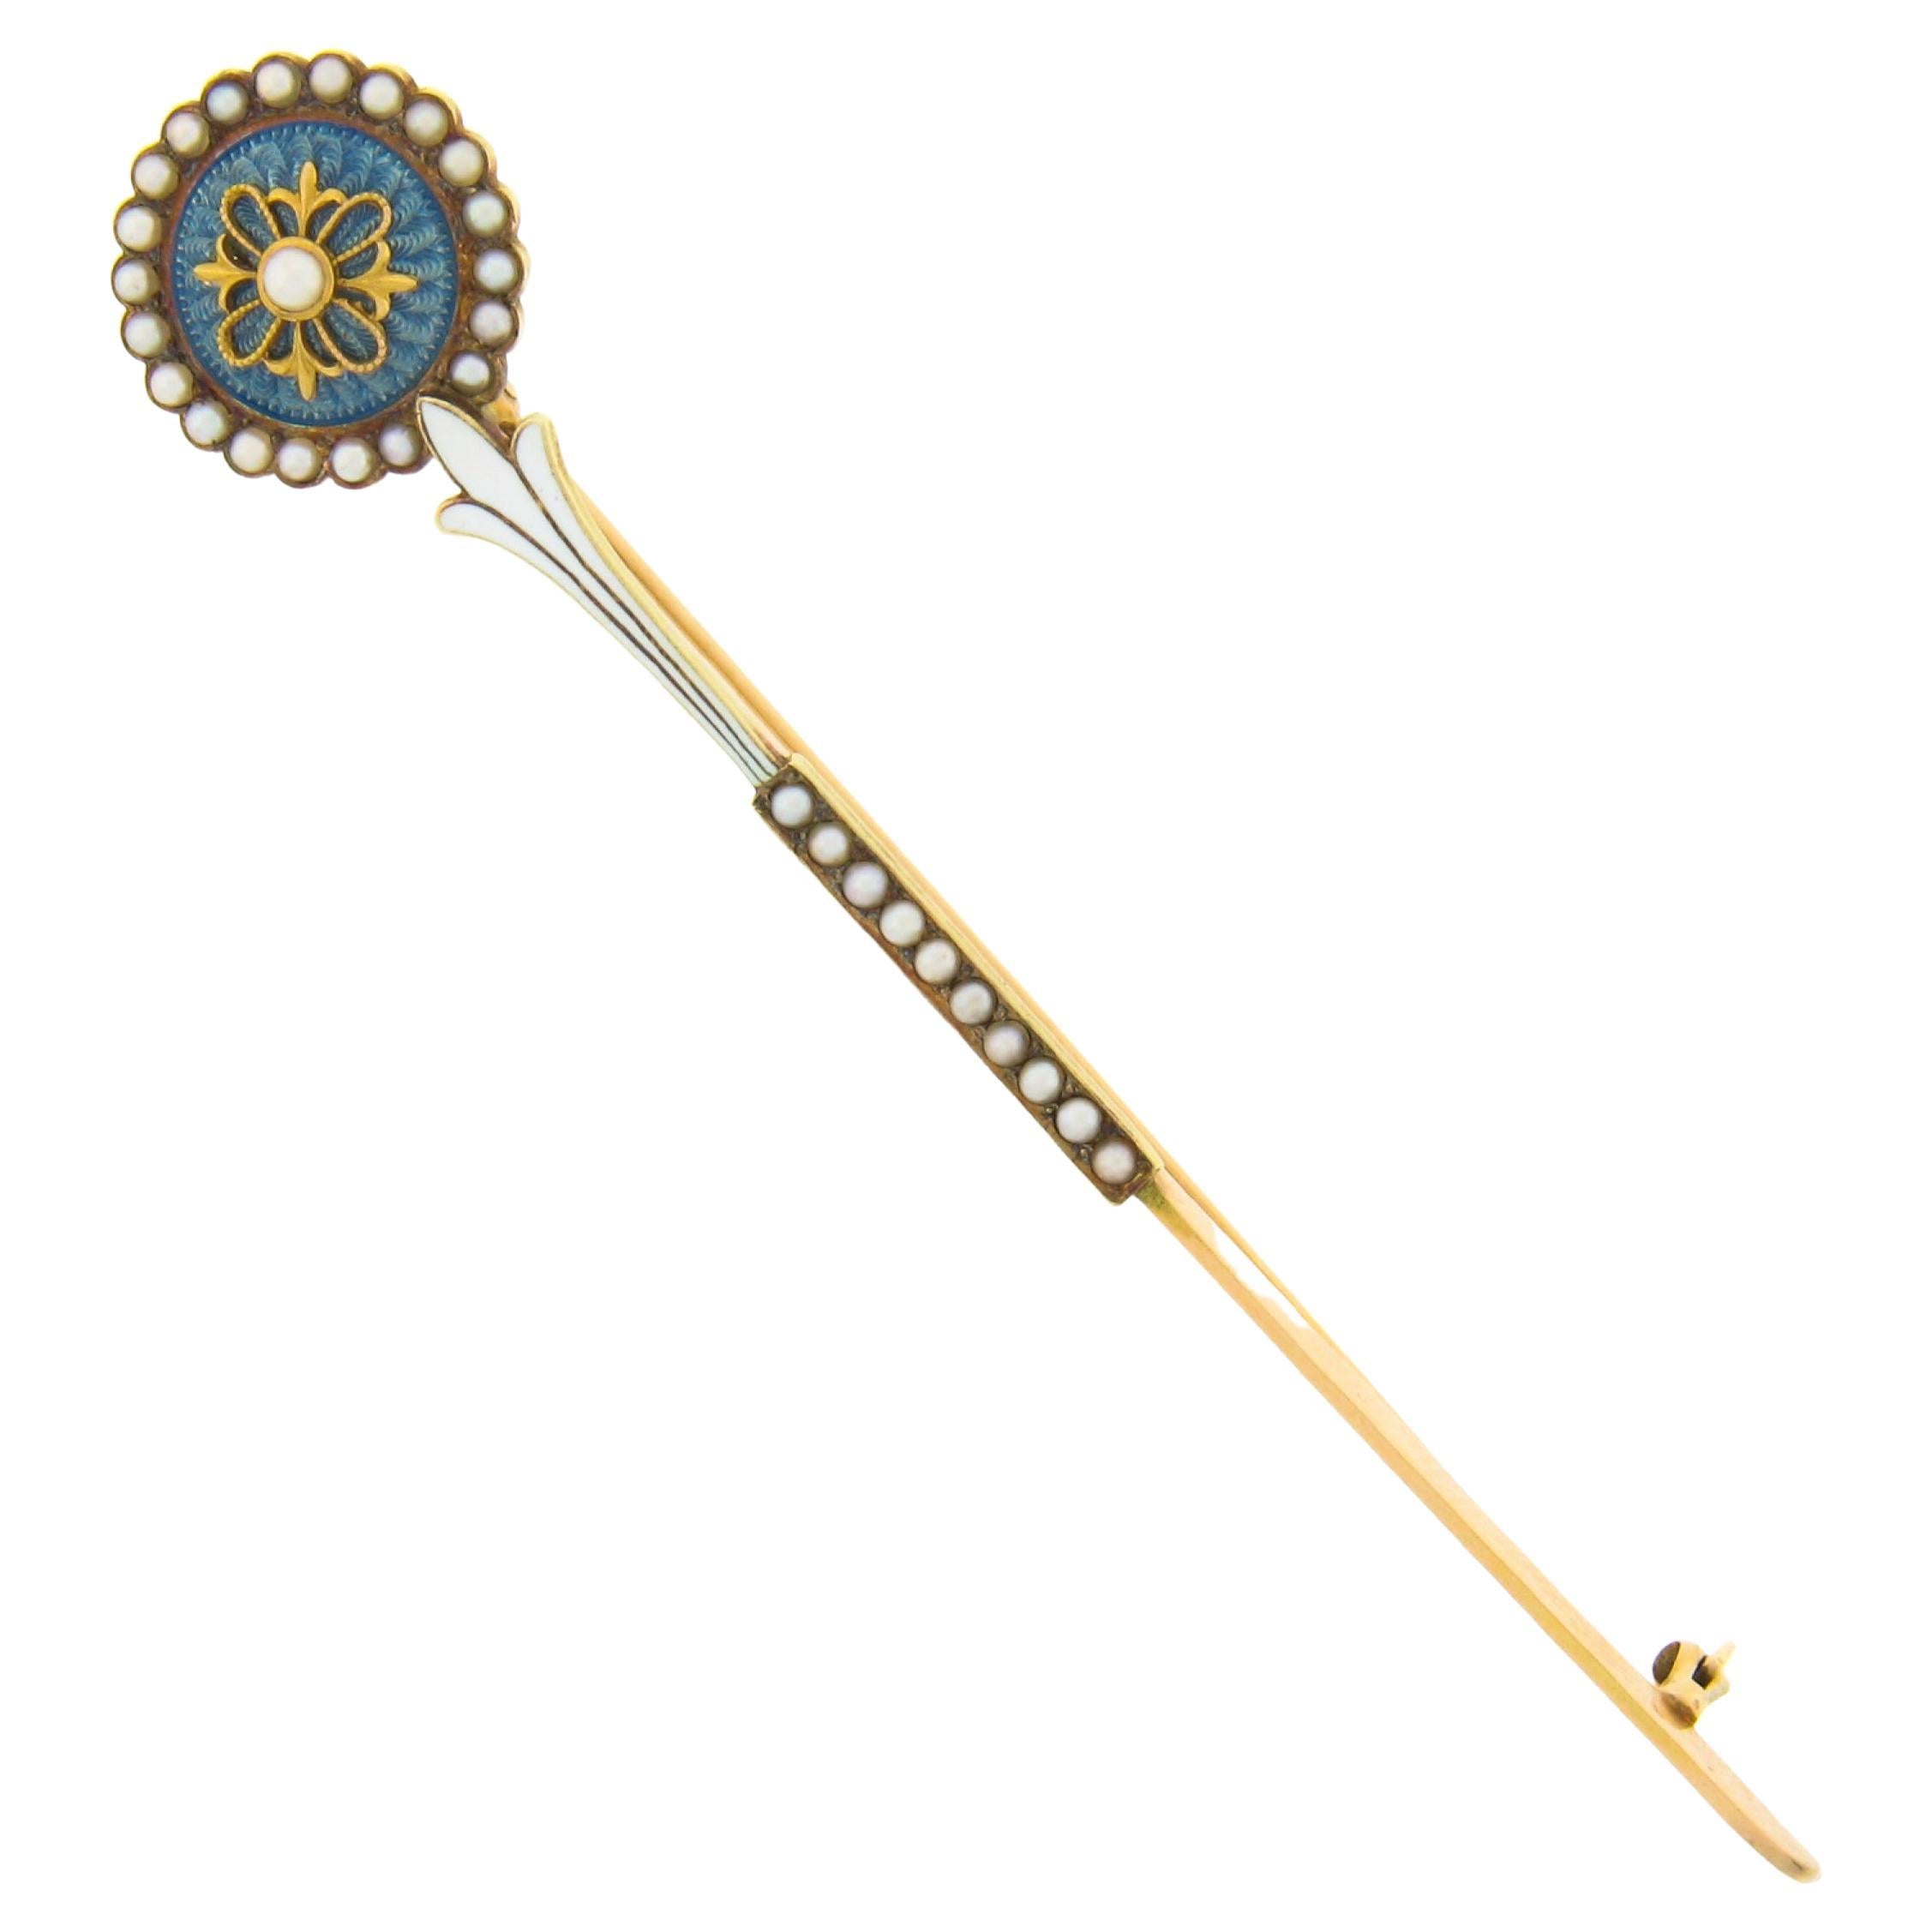 Antique Art Deco Allsopp Bliss Co. 14k Gold Seed Pearl & Enamel Long Pin Brooch